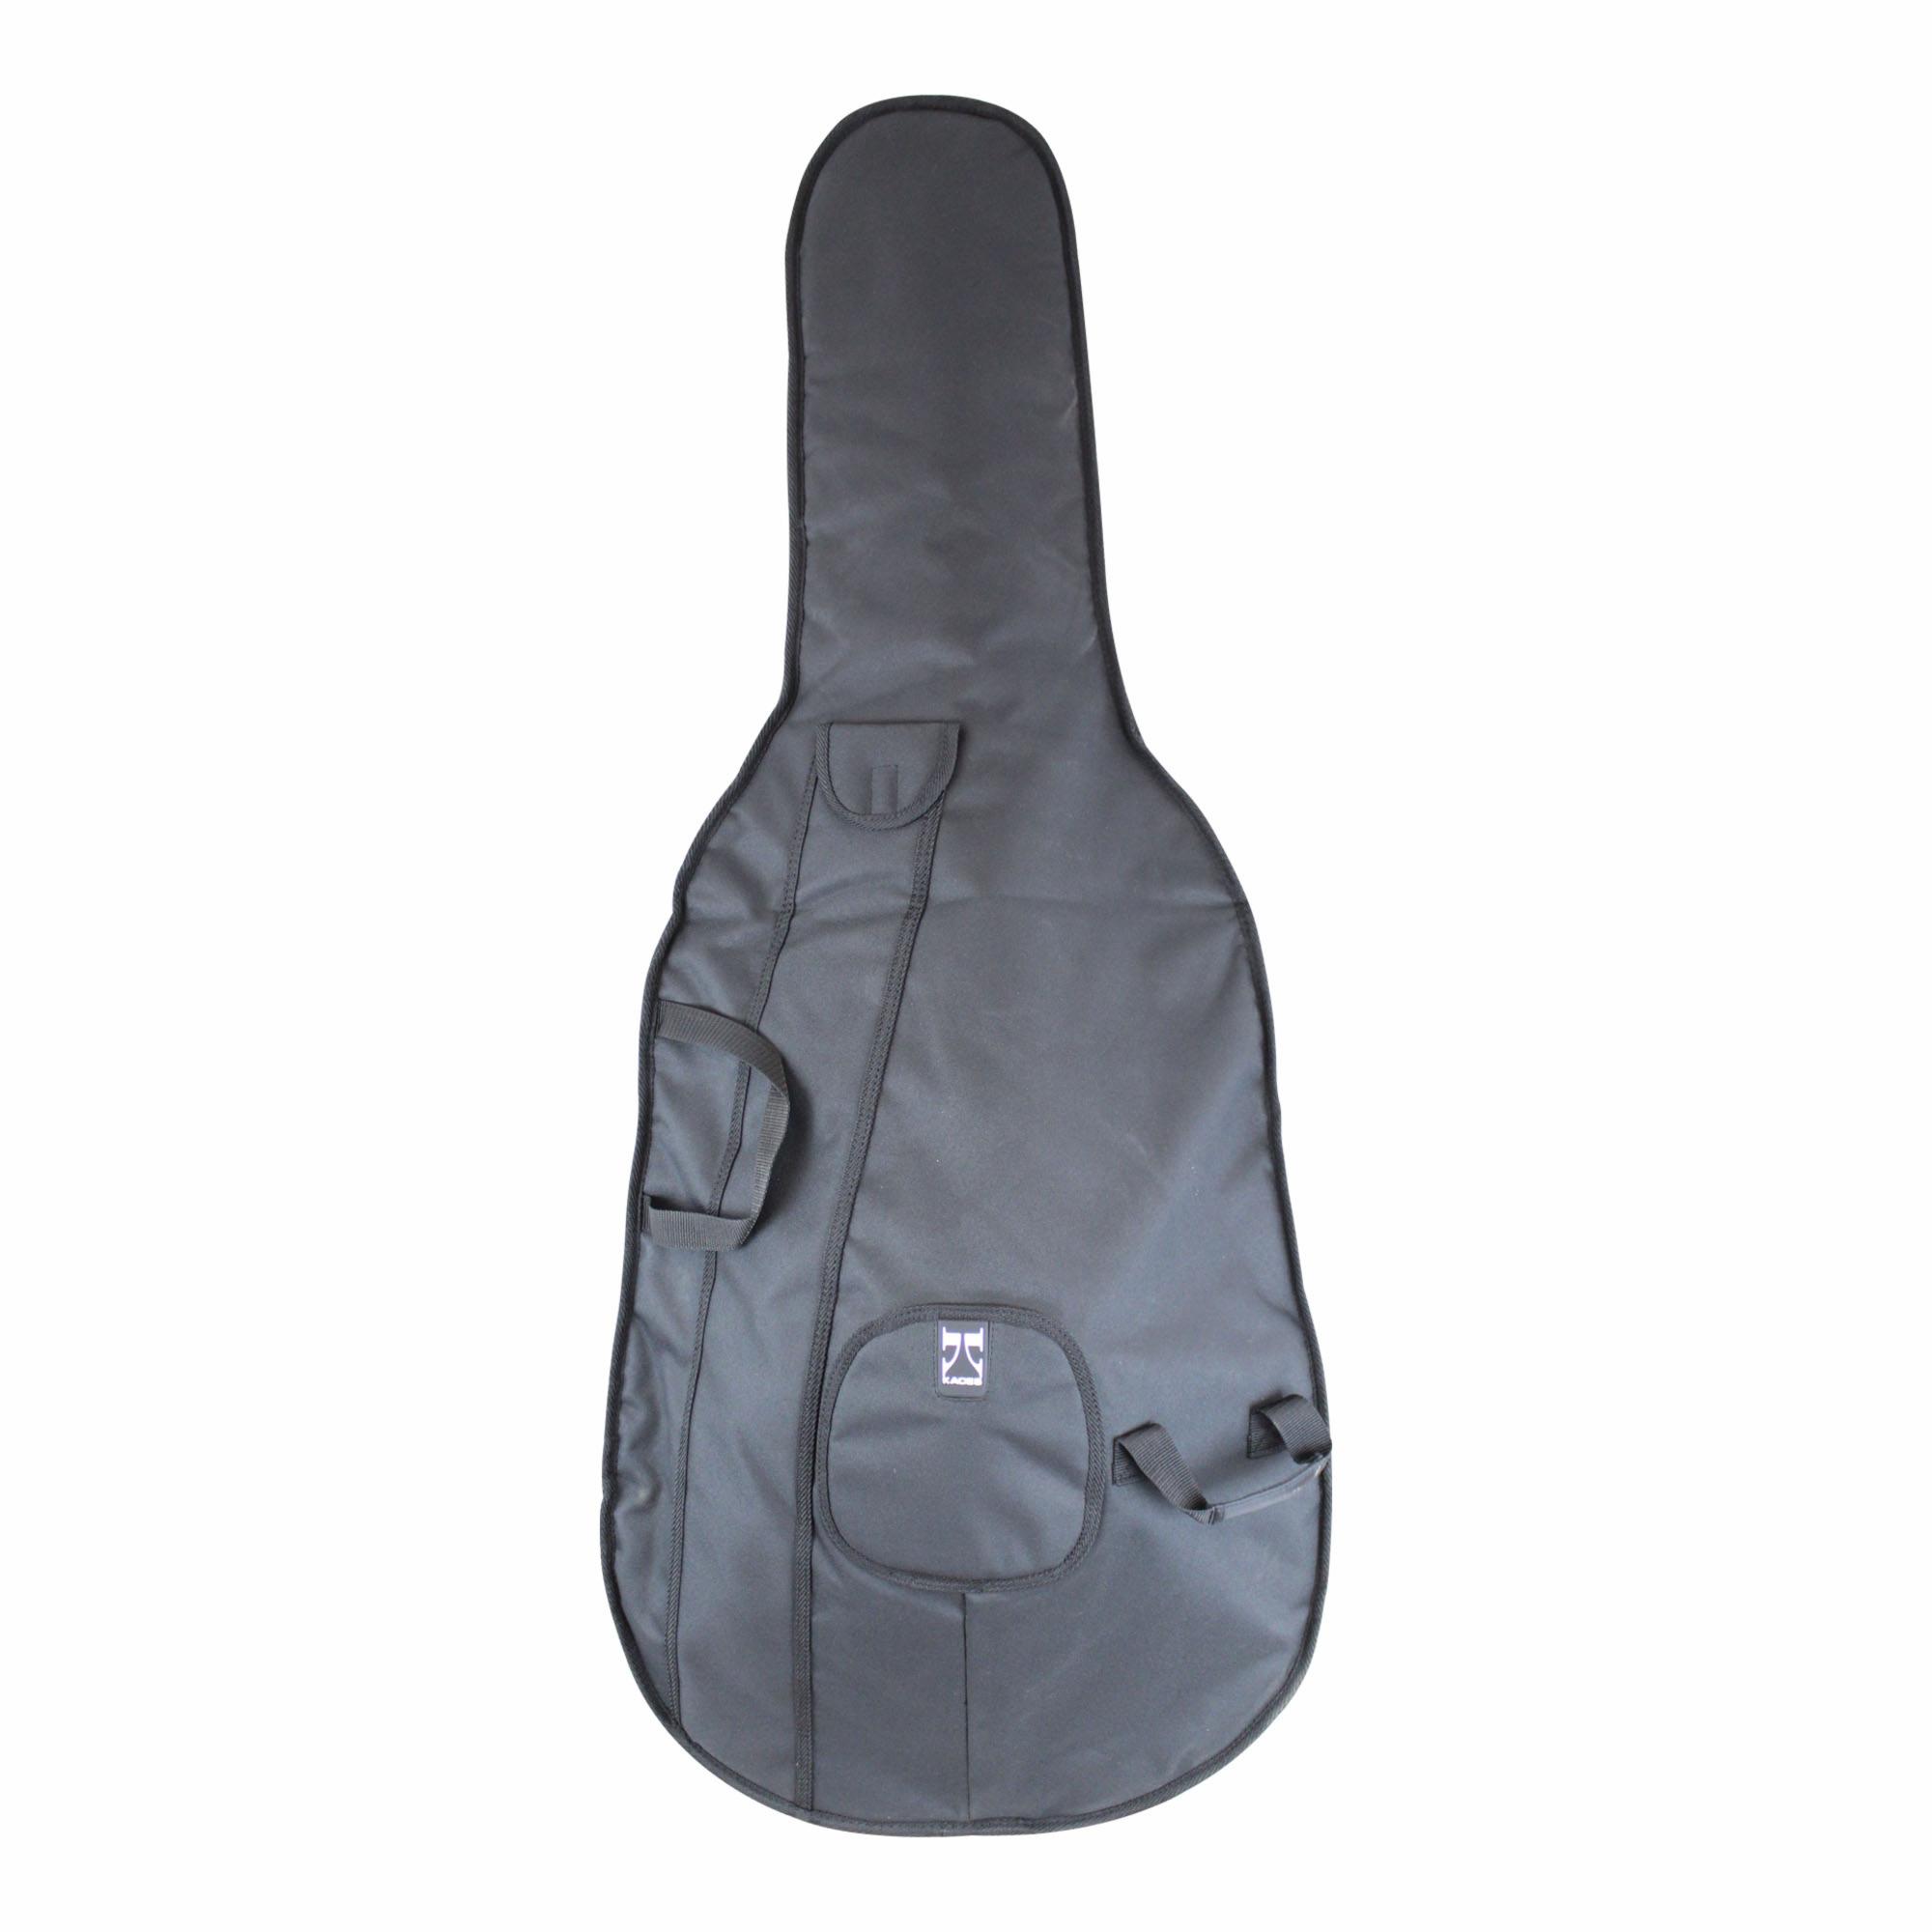 Kaces University Deluxe Cello Bag